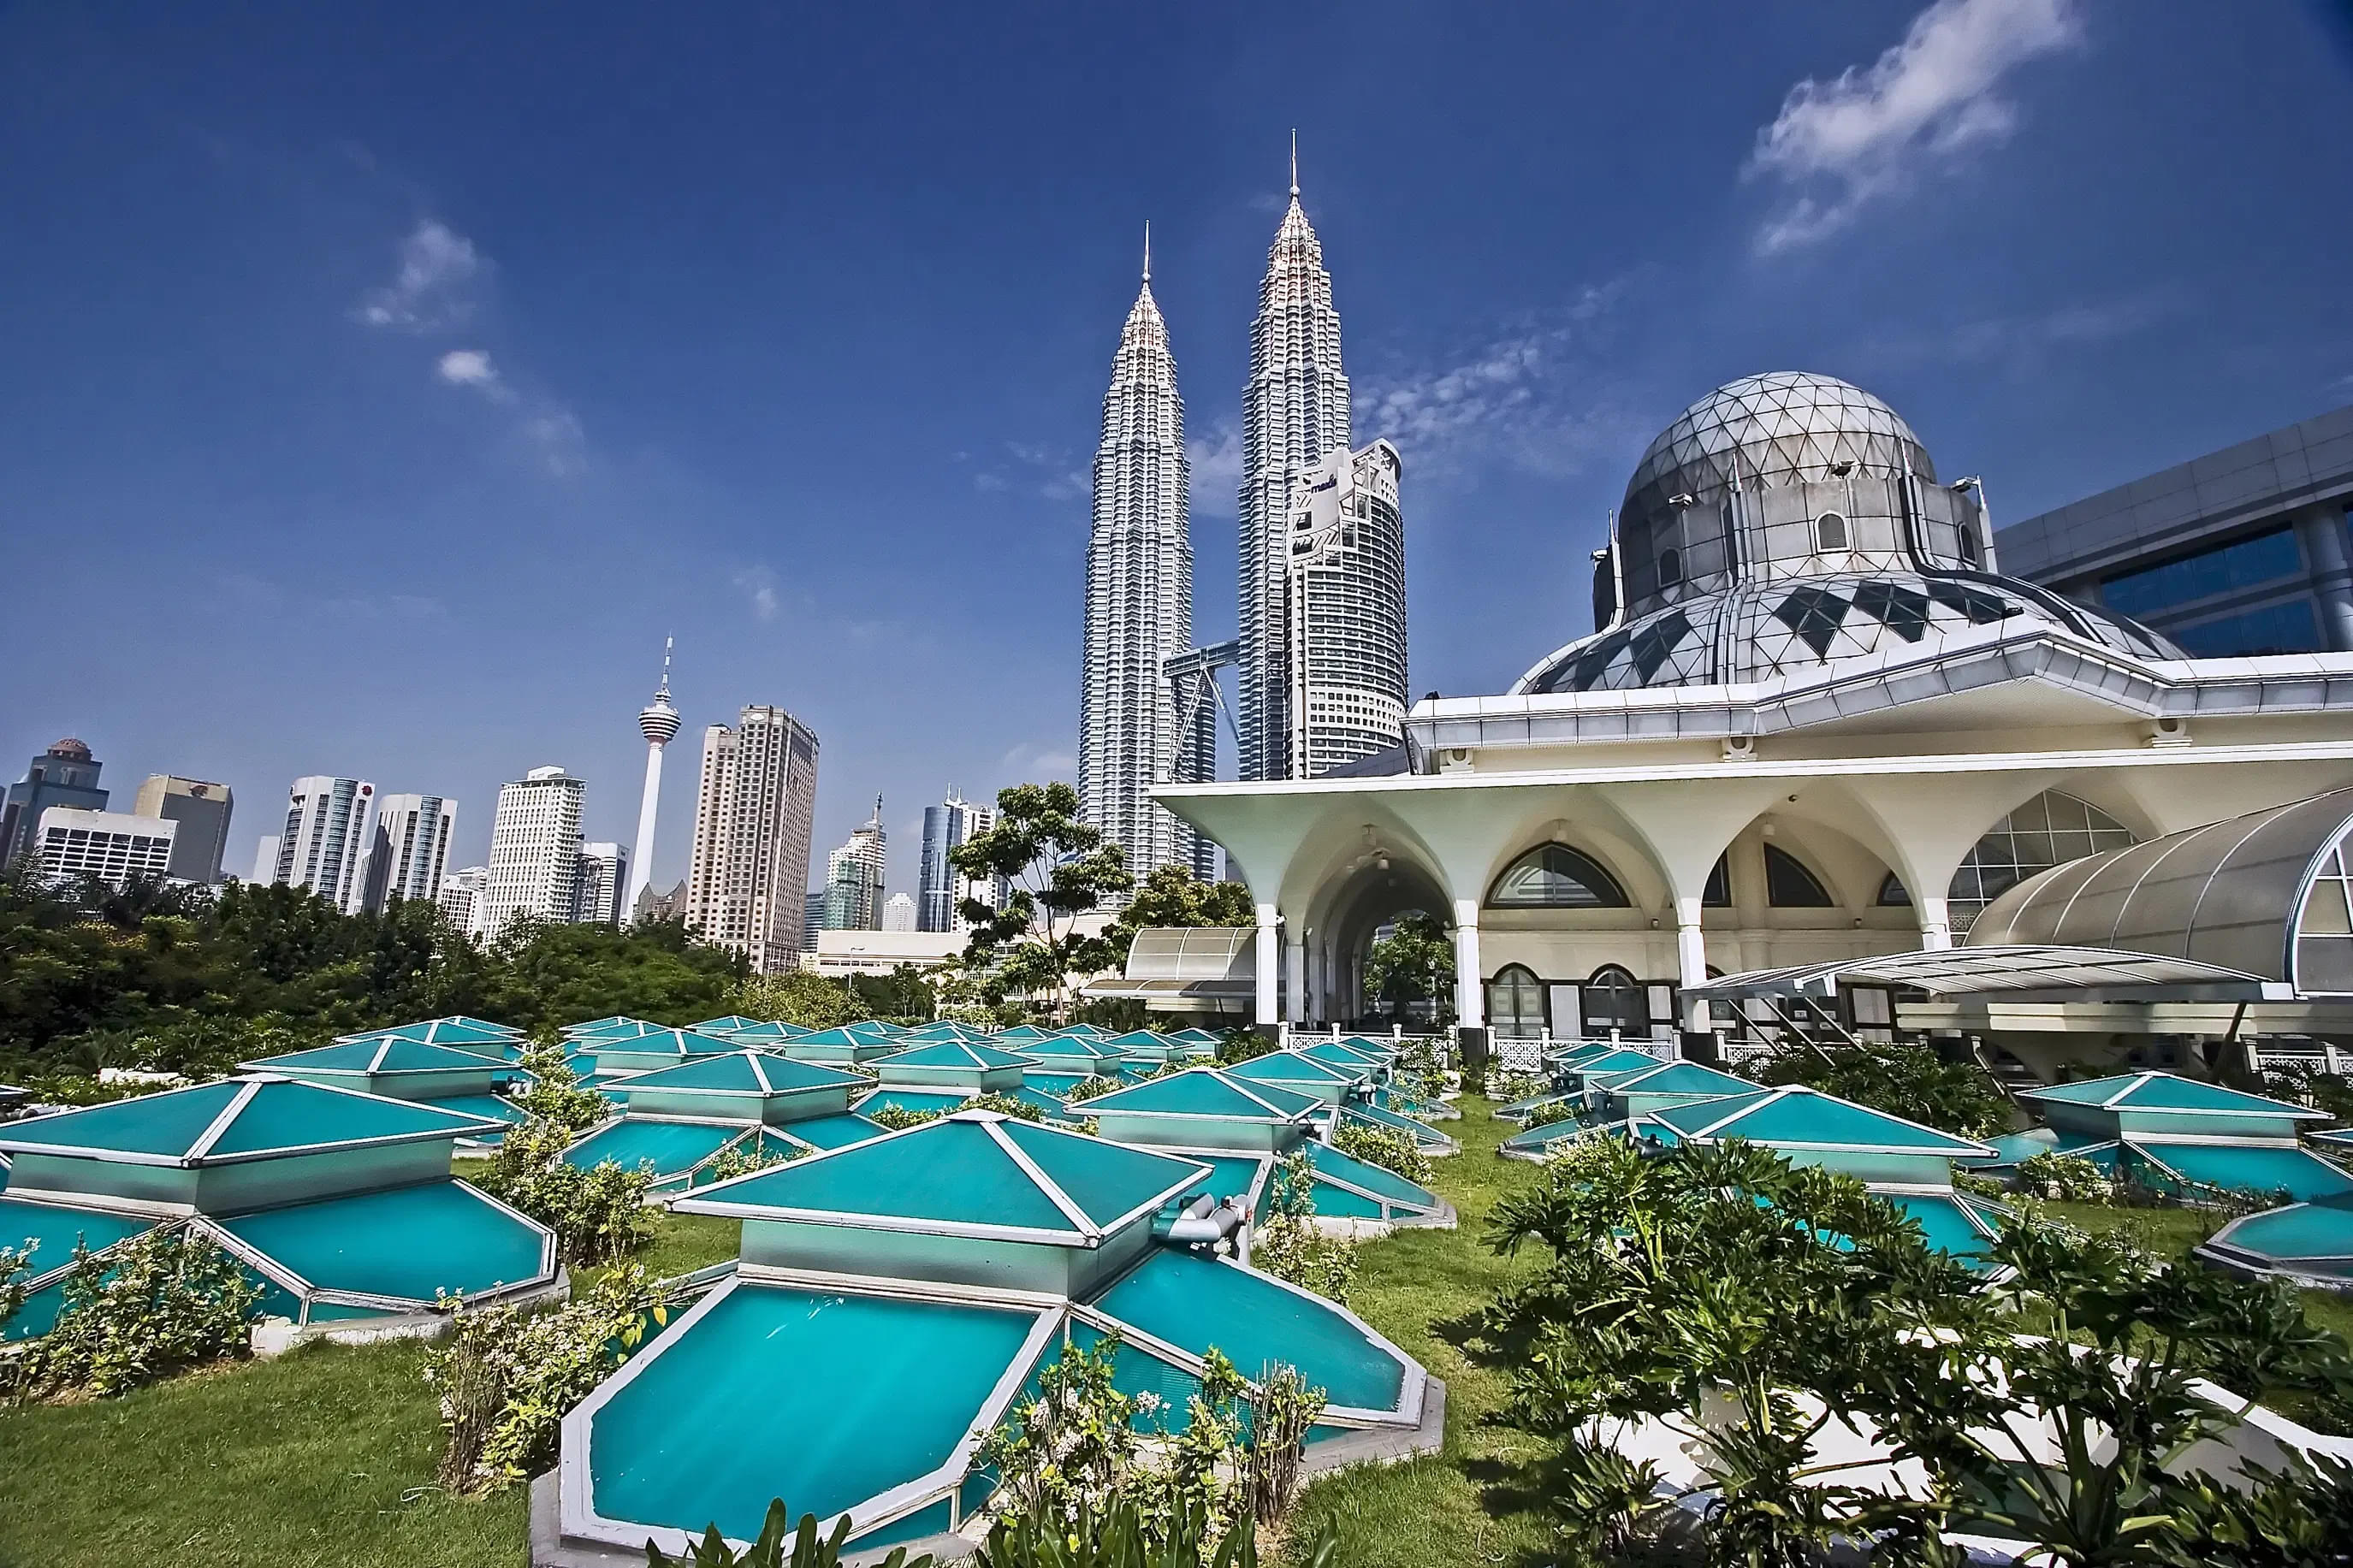 Kuala Lumpur skyline with Mosque